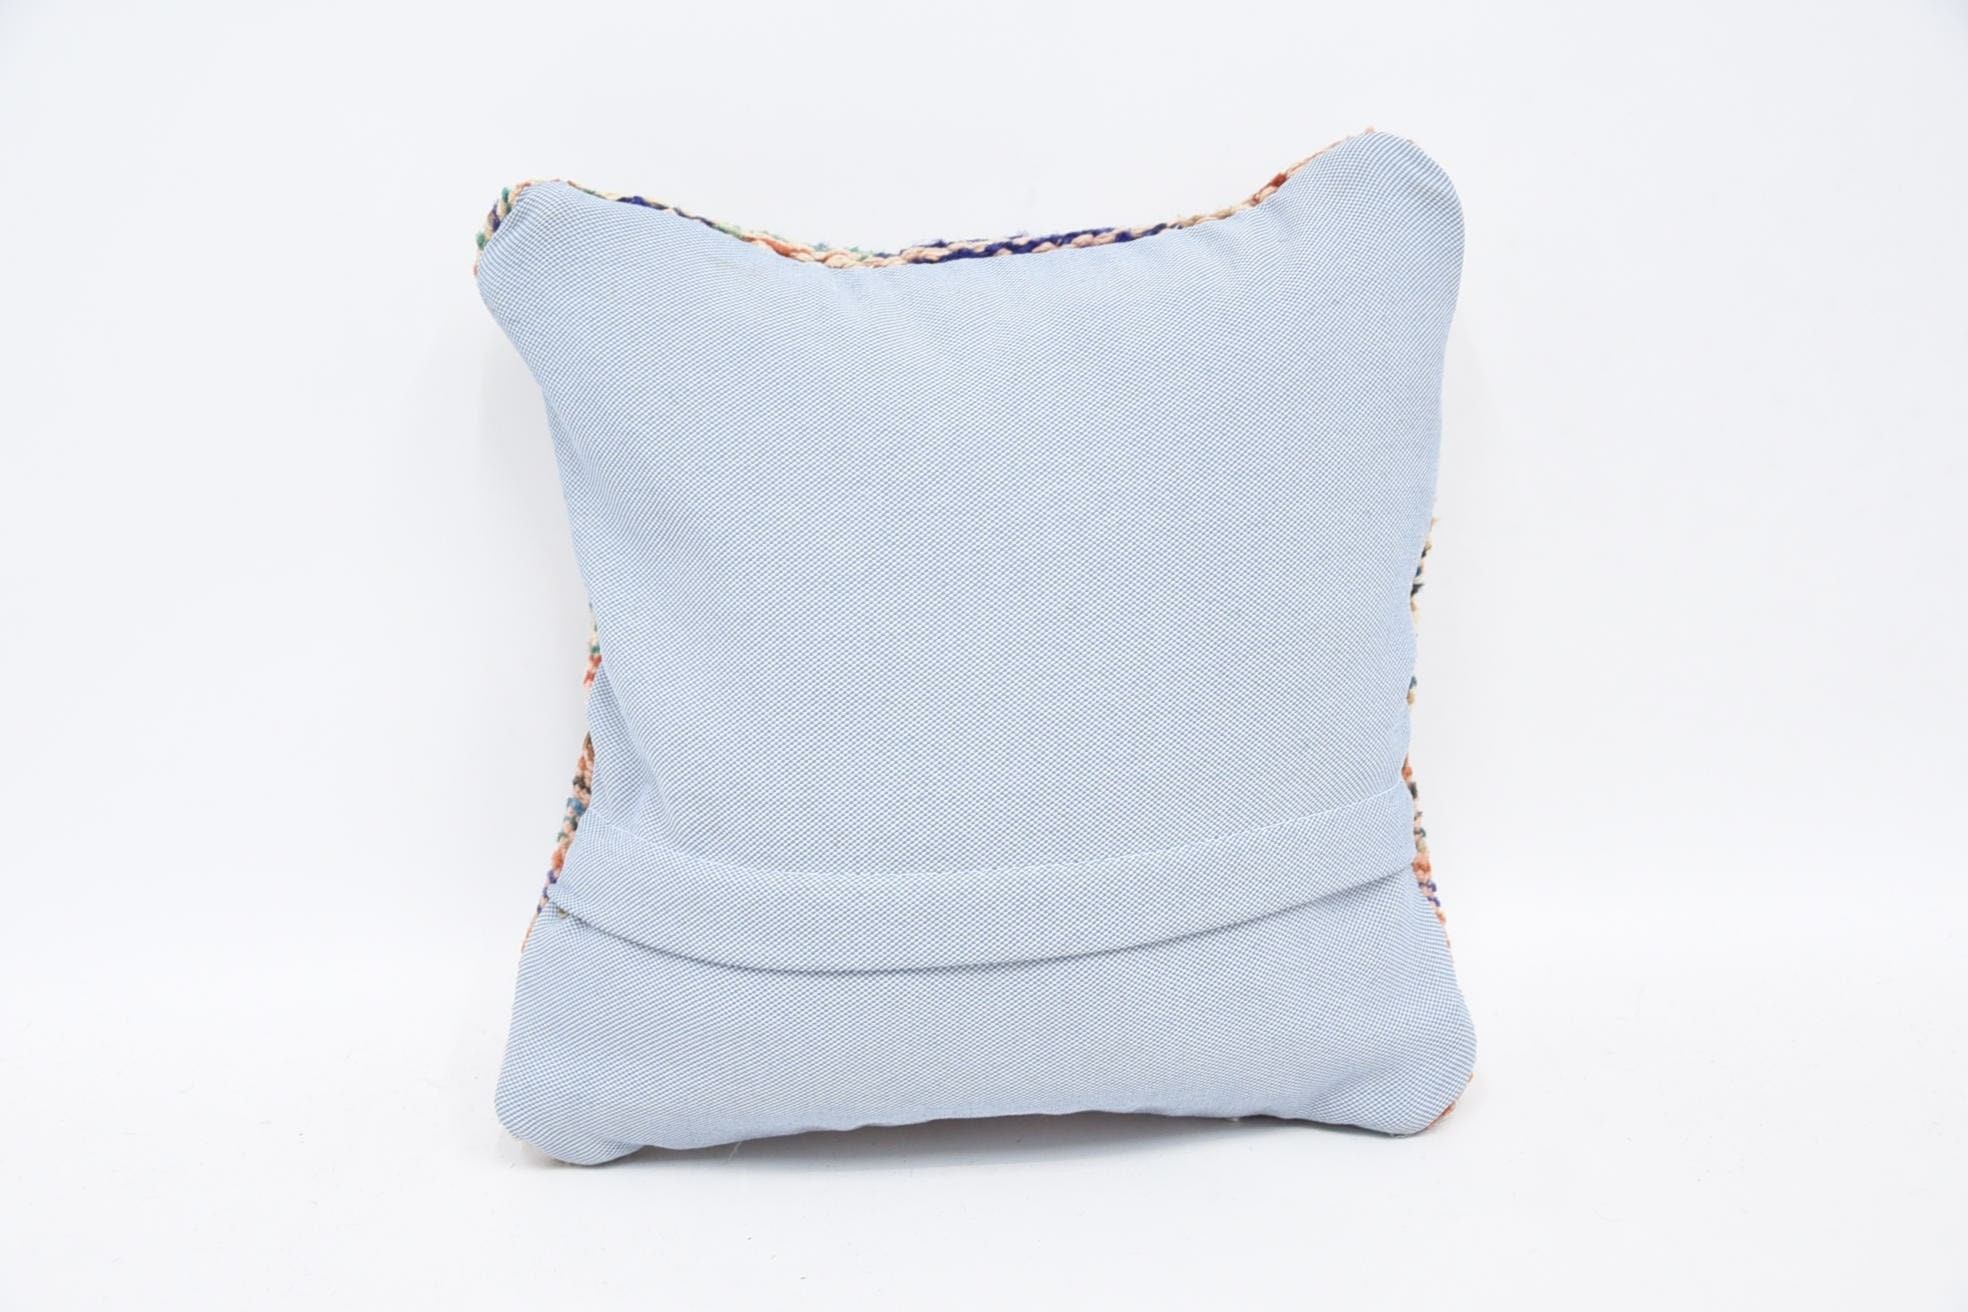 12"x12" Blue Pillow, Boho Pillow, Vintage Kilim Throw Pillow, Chair Pillow, Turkish Rugs Cushion Case, Kilim Pillow Cover